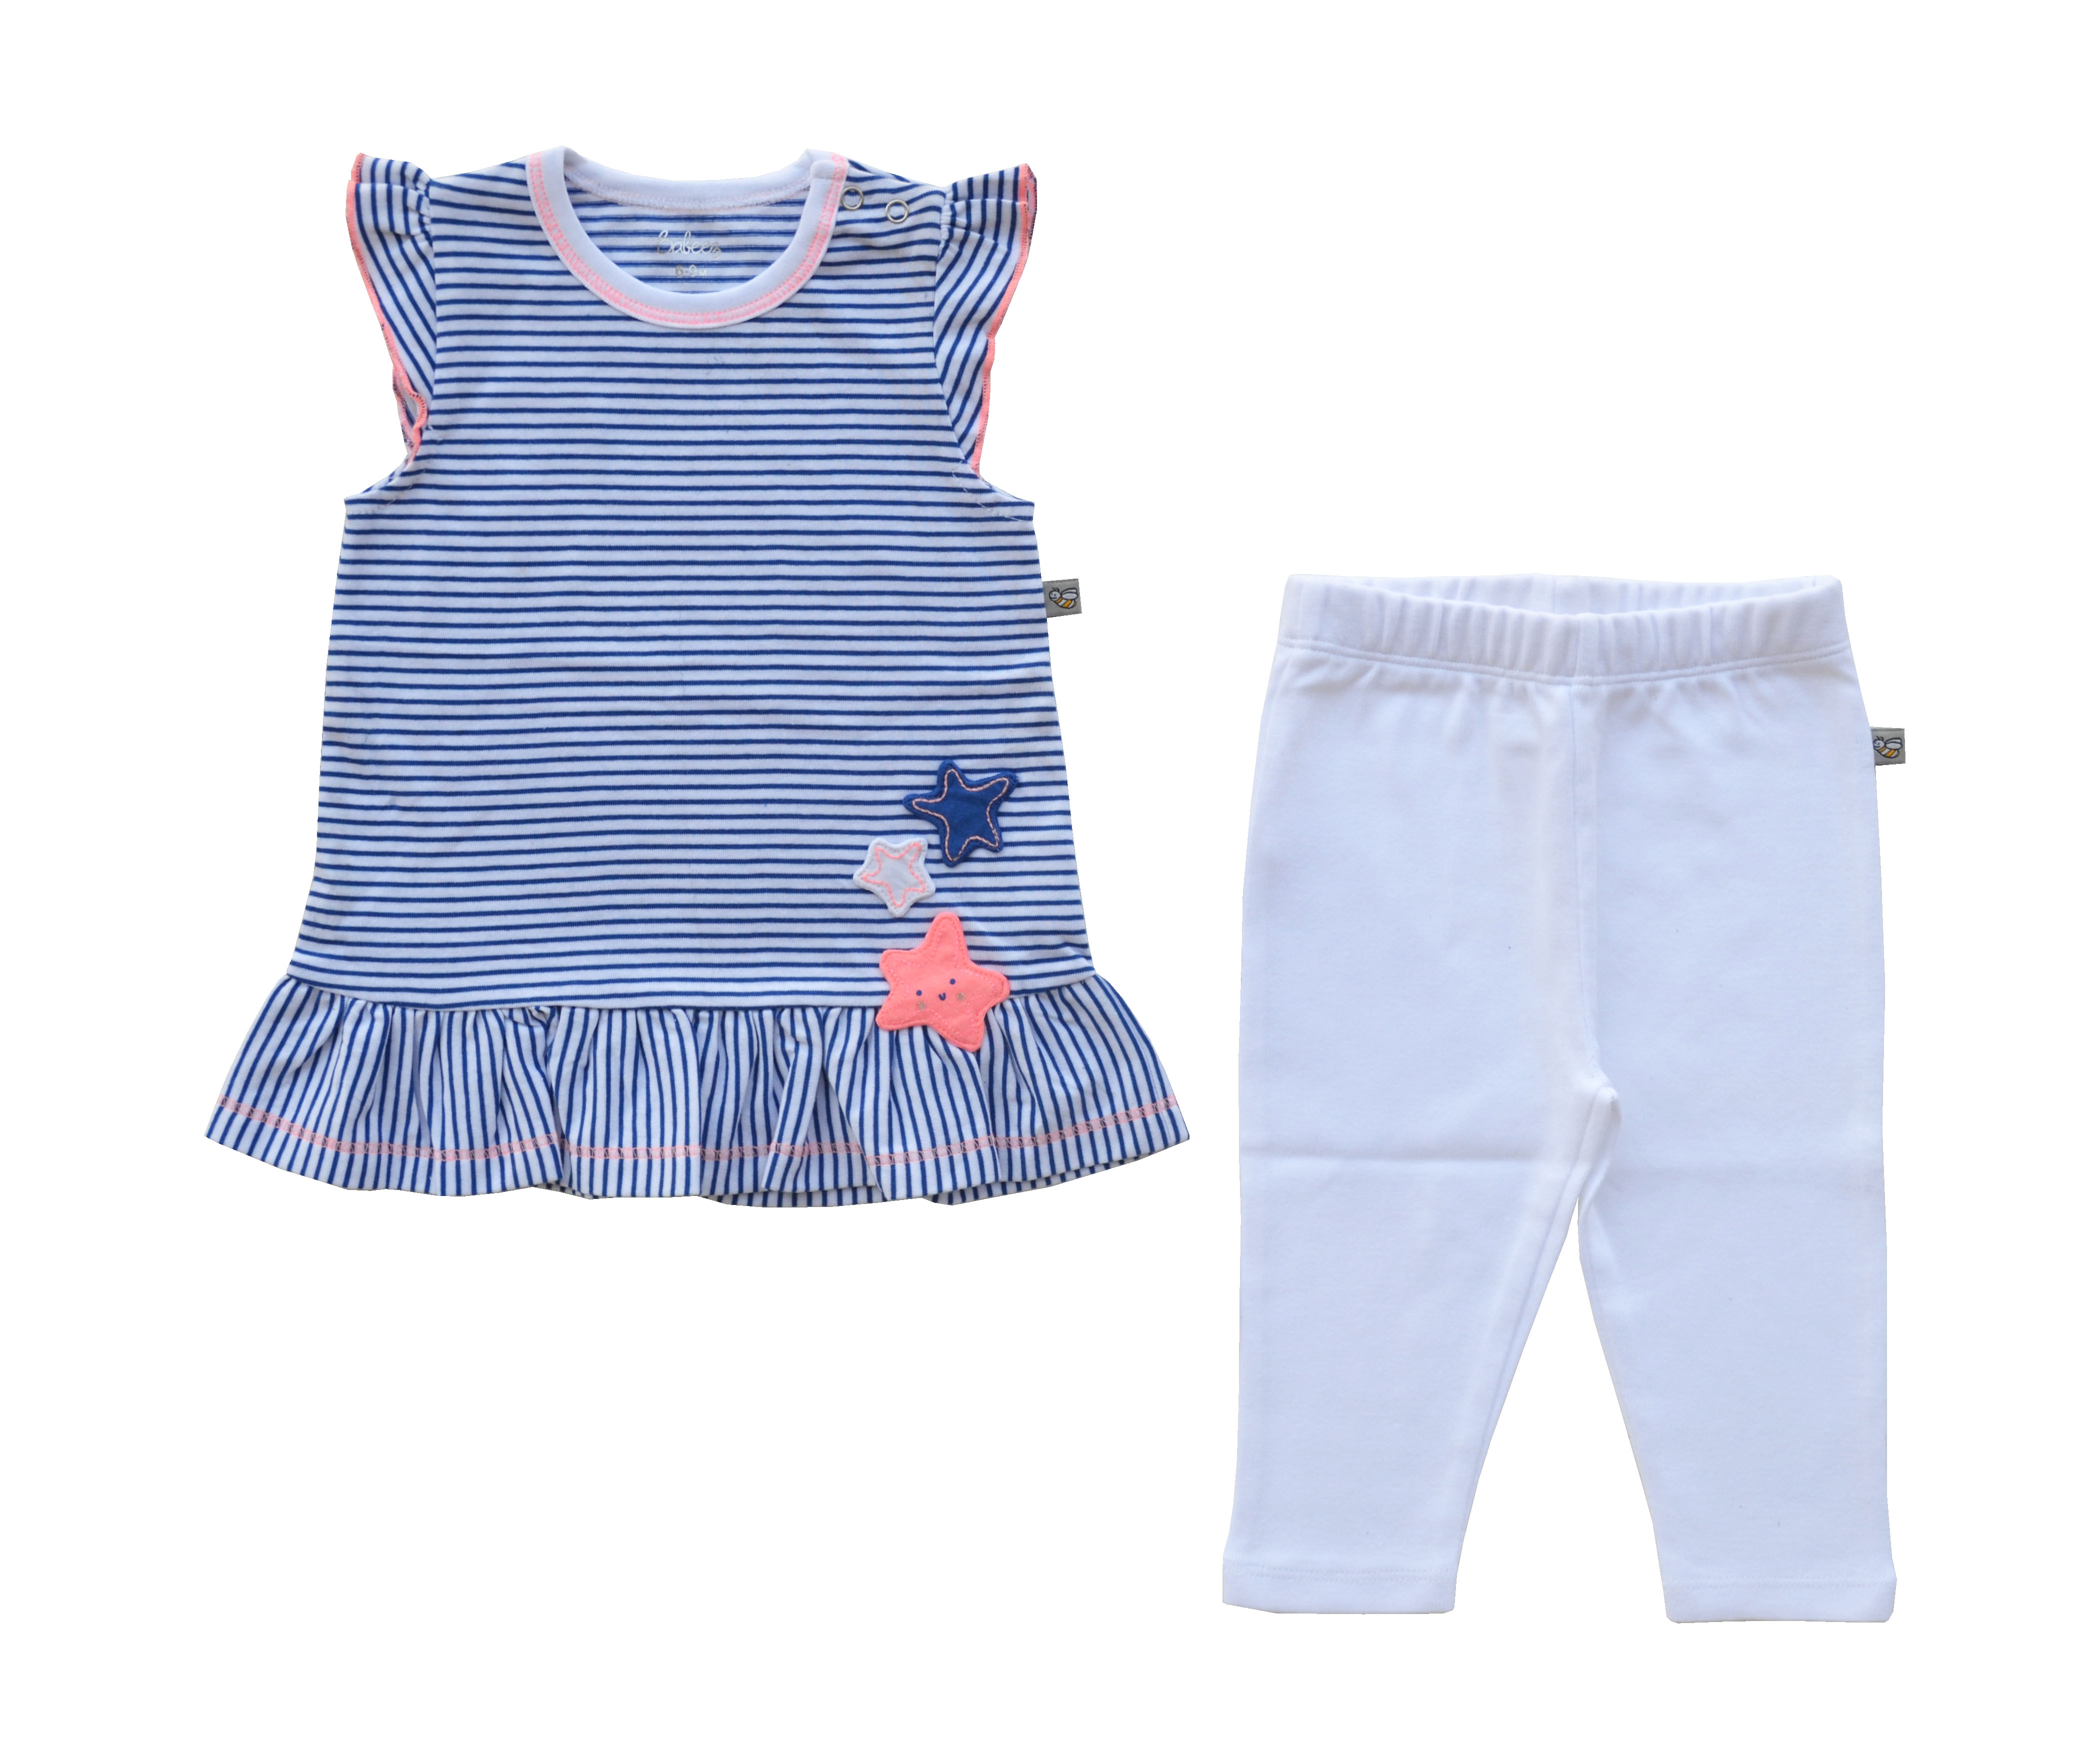 Babeez | Blue/White Striped Top With Applique Work + White Legging Set (100% Cotton Jersey) undefined